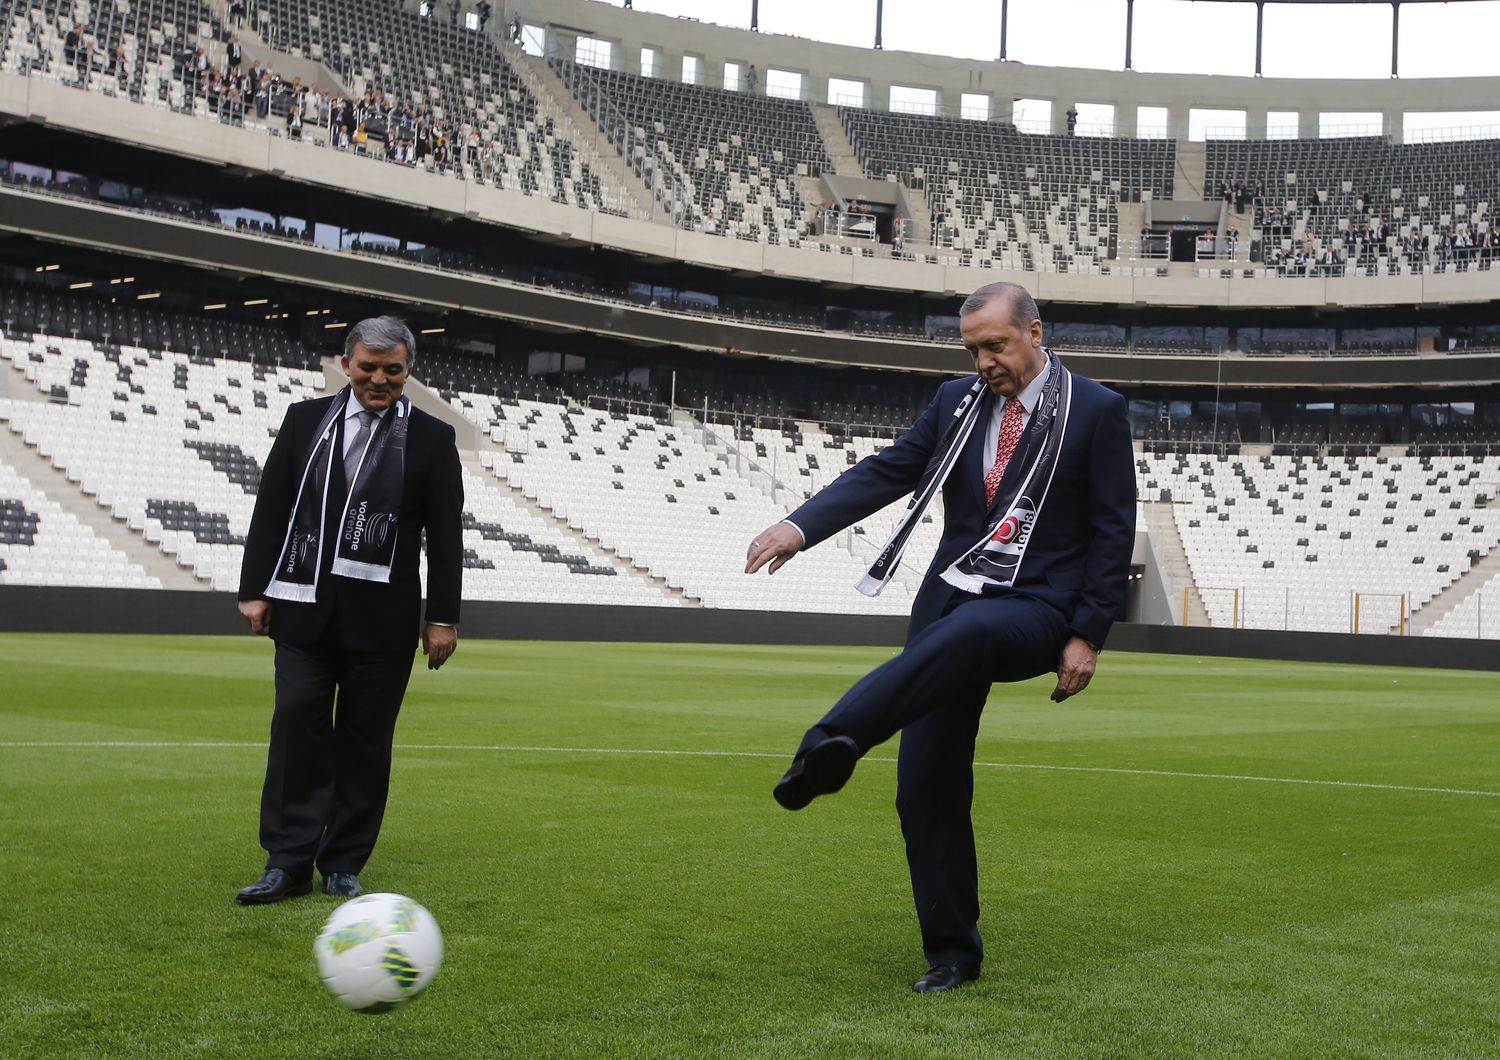 Istanbul, stadio Arena Inonu del Besiktas. Il presidente Recep Tayyip Erdogan e l'ex presidente Abdullah Gul giocano a calcio